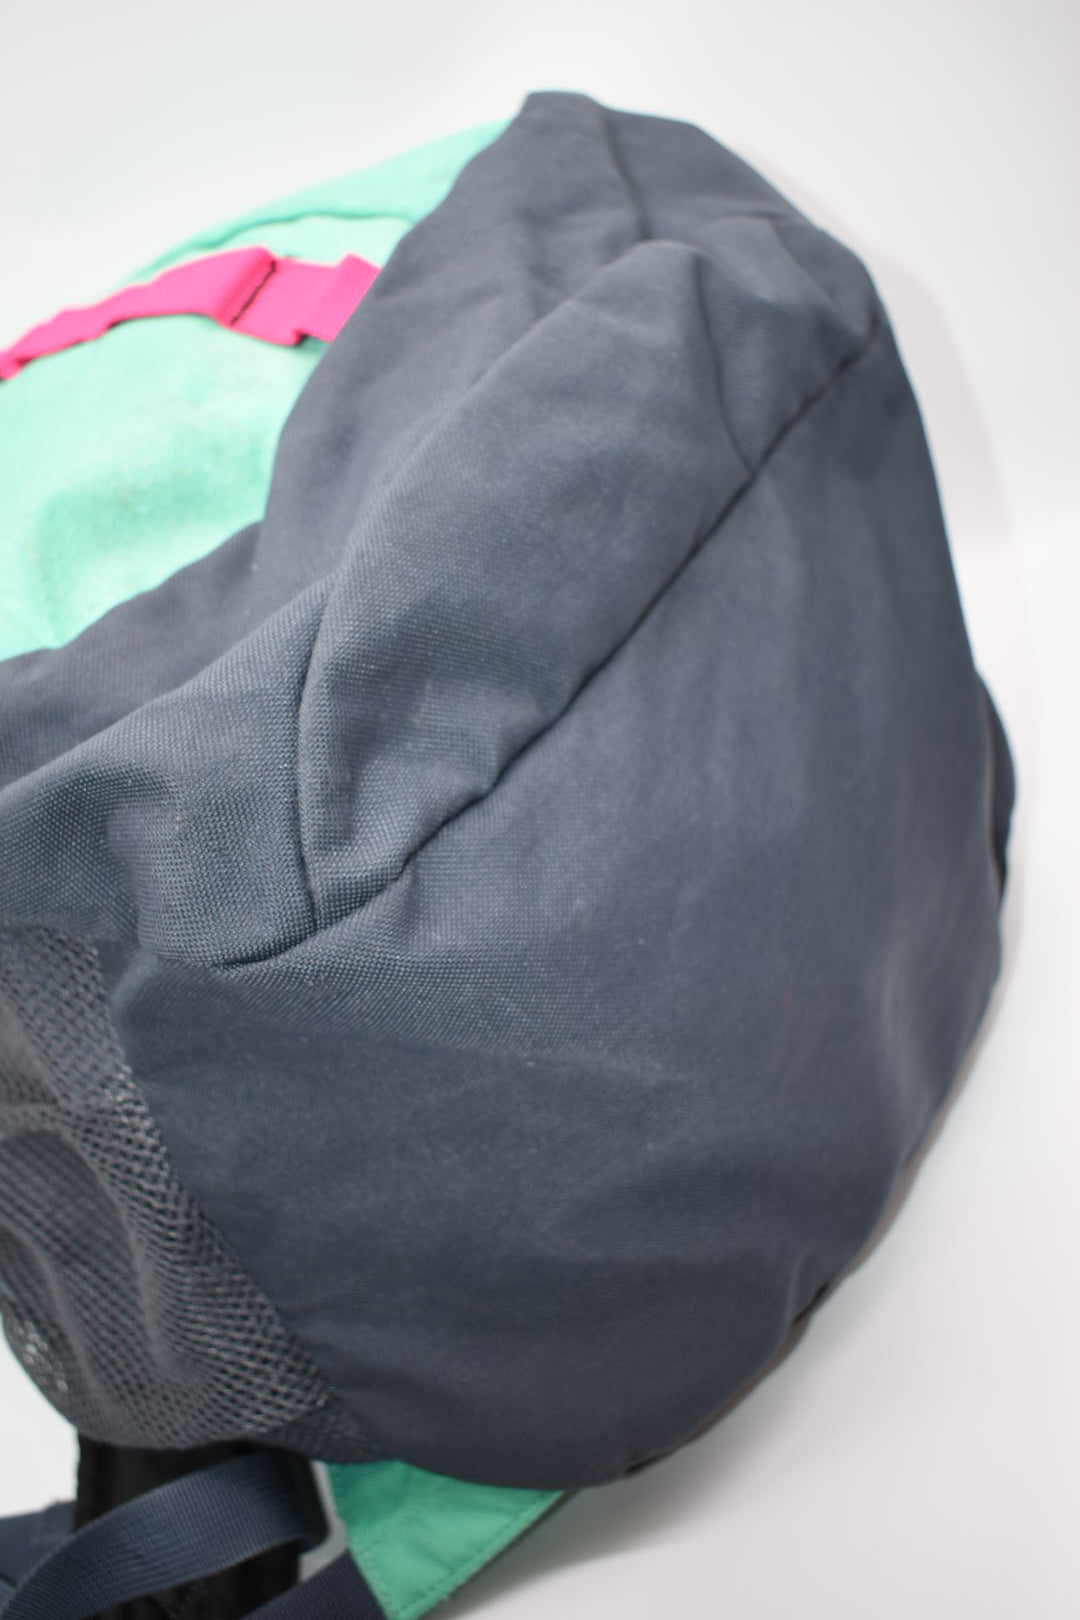 Adidas Teal & Pink Large Backpack